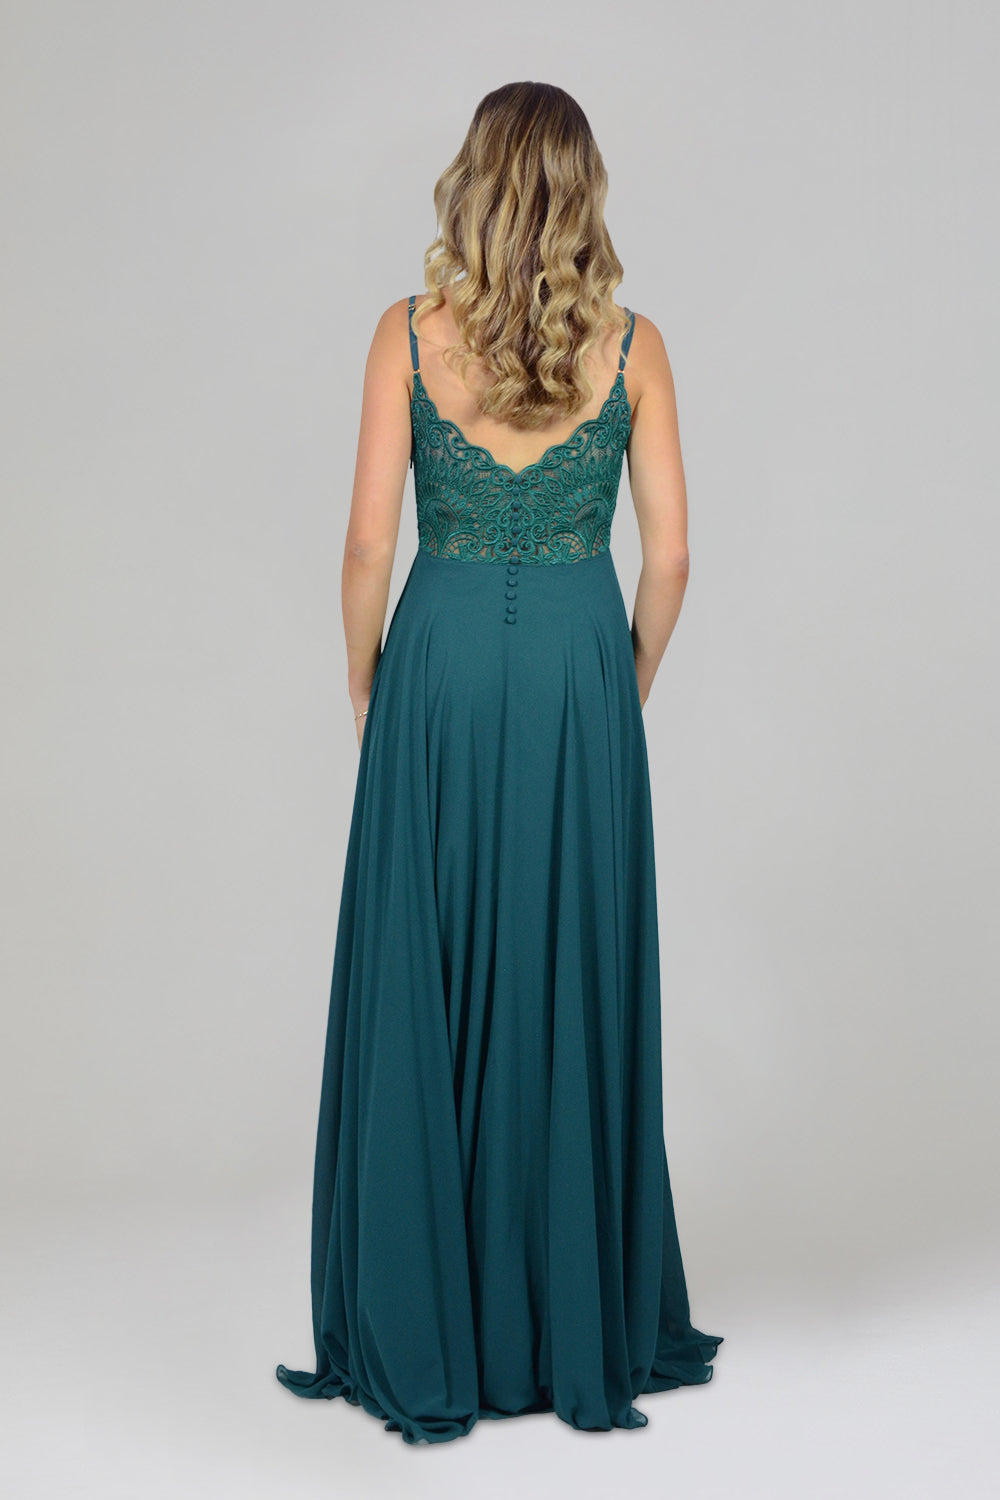 Strapless Emerald Green Bridesmaid Dress with Side Slit Flowing Chiffon  Sleeveless Summer Bridesmaid Dresses